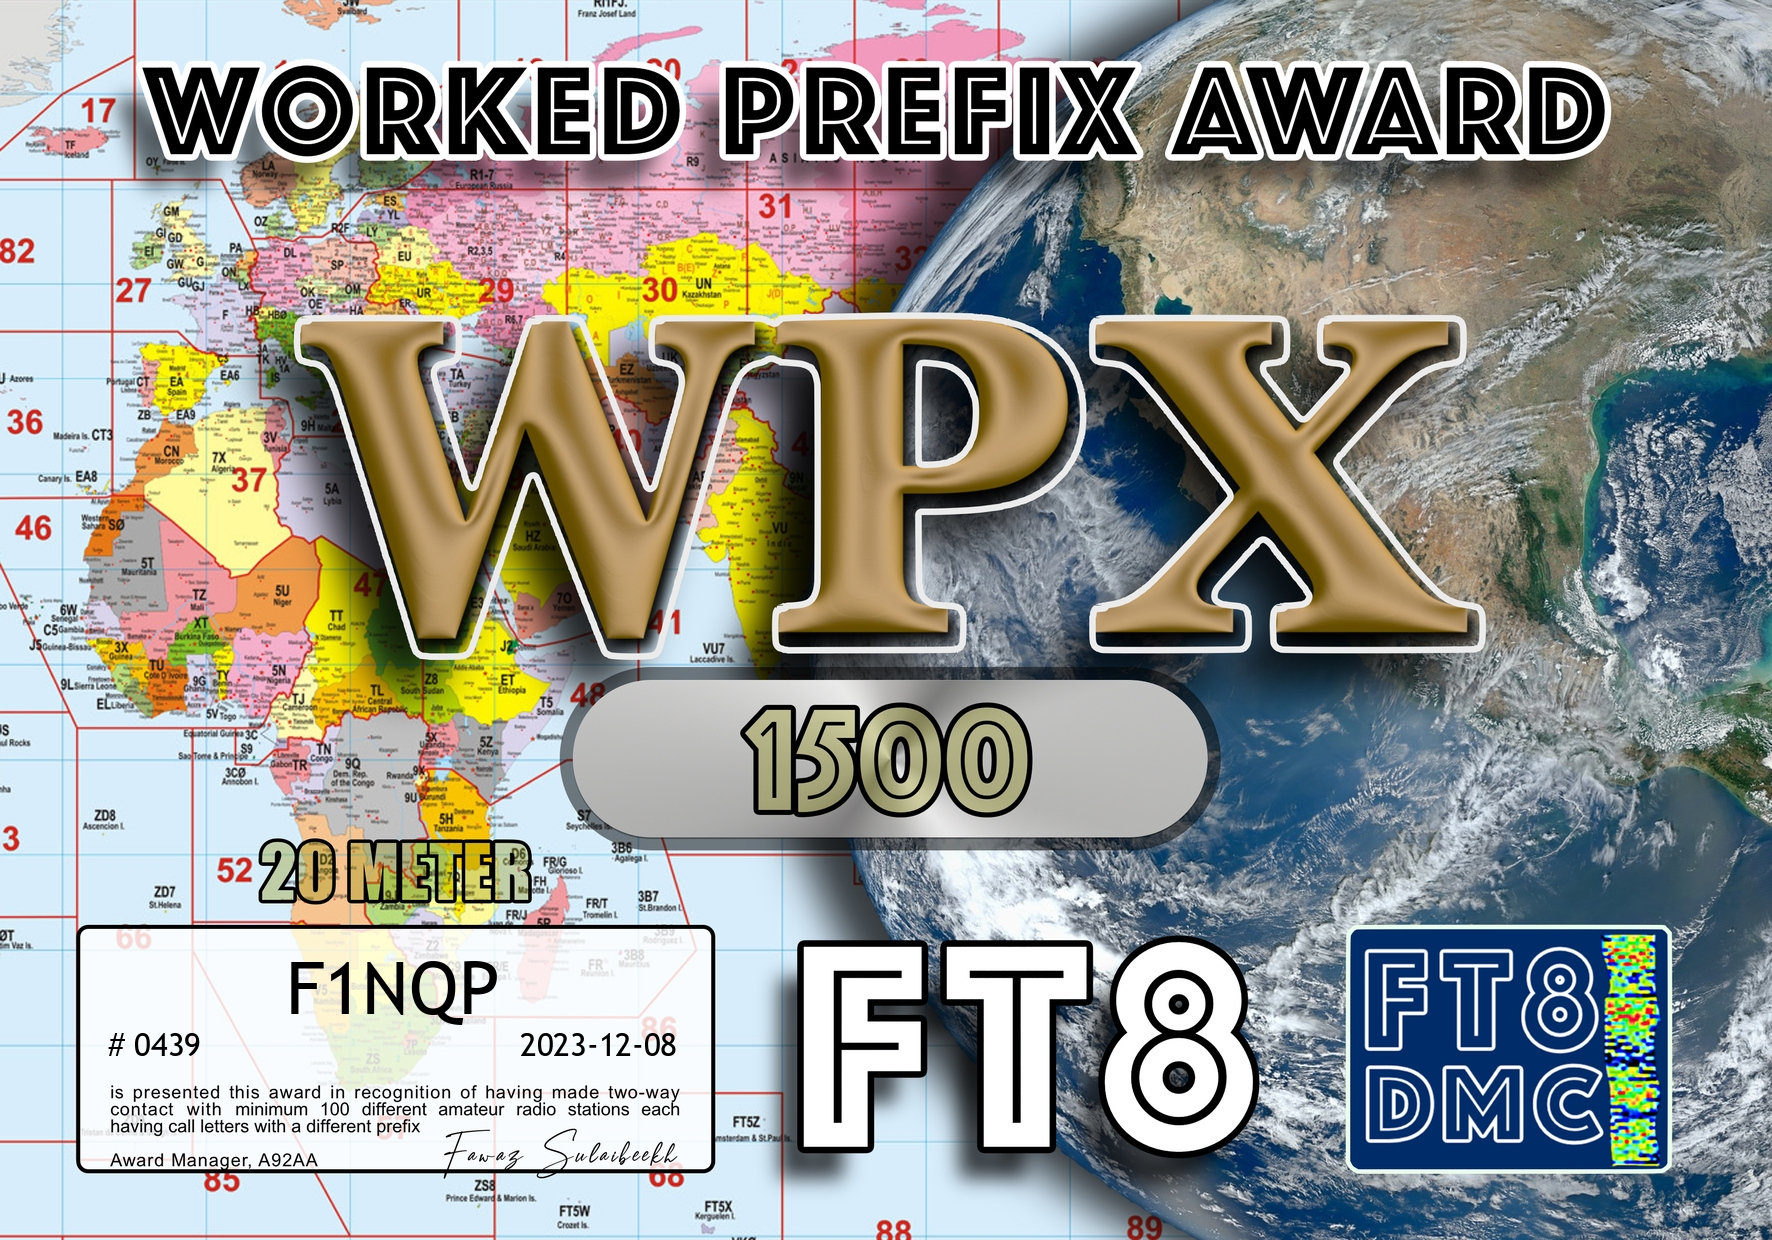 F1NQP-WPX20-1500_FT8DMC.jpg